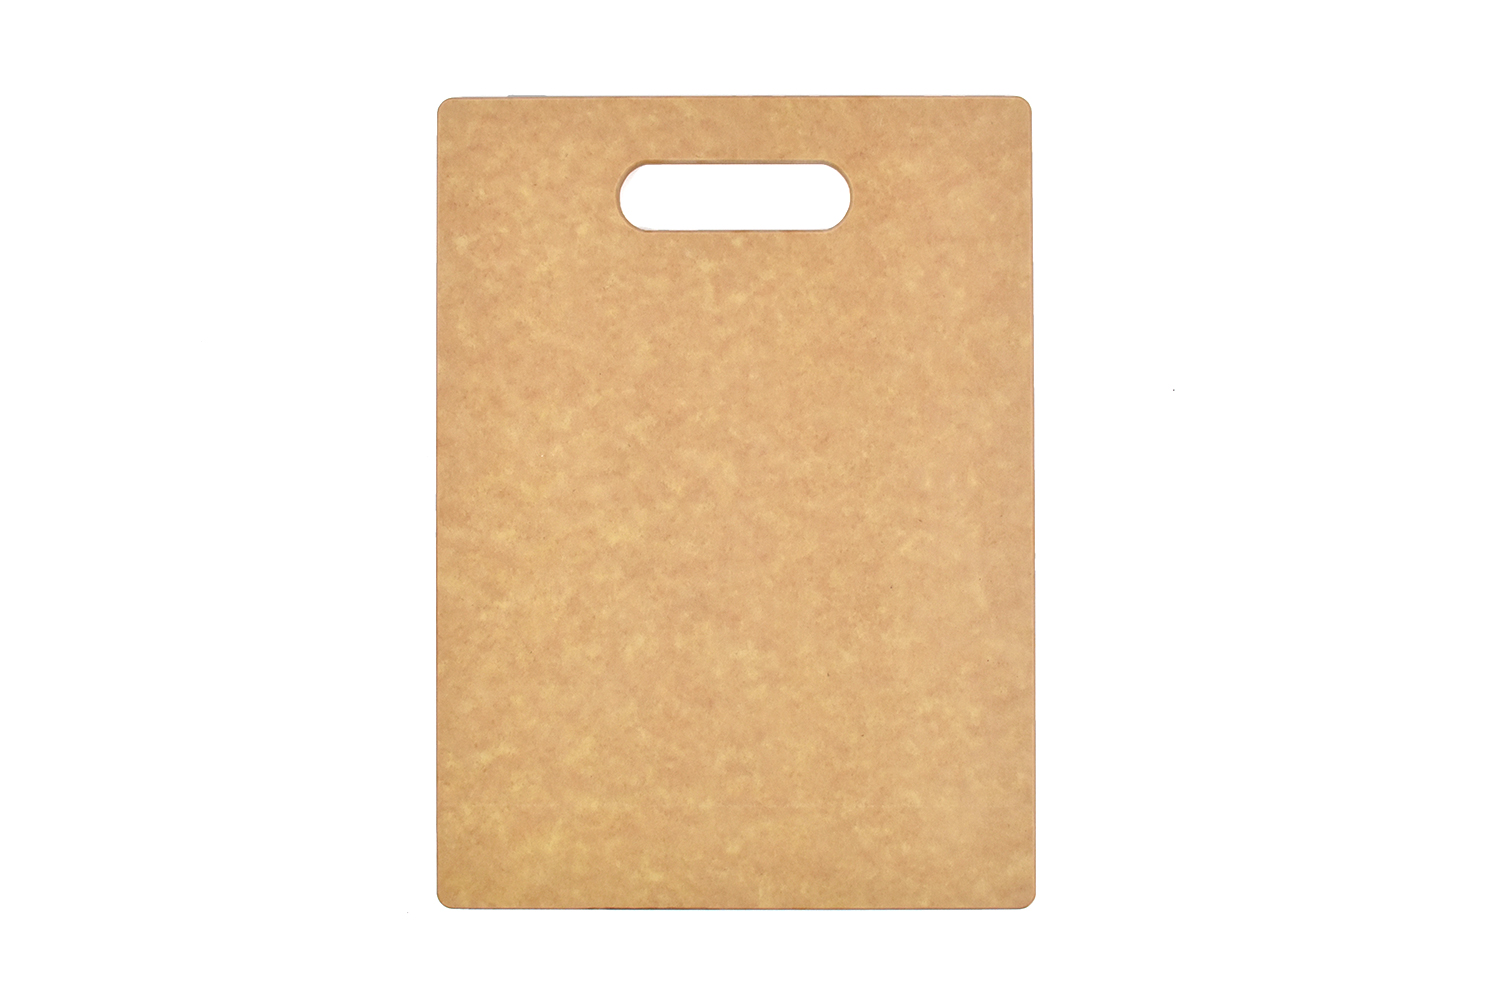 Small handle wood fiber board rounded corners & edges (Dishwasher safe)